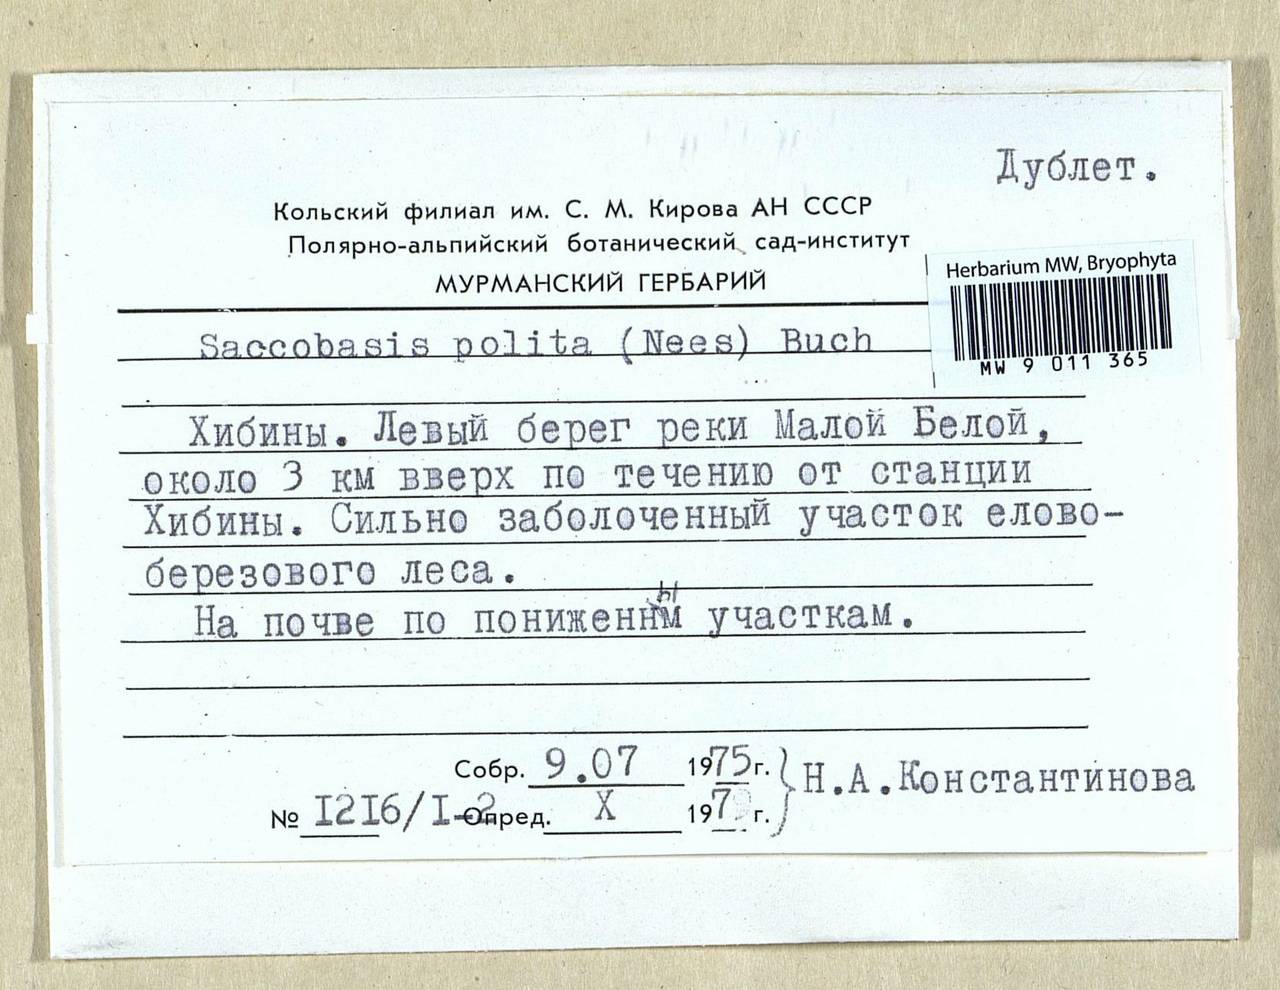 Saccobasis polita (Nees) H. Buch, Bryophytes, Bryophytes - Karelia, Leningrad & Murmansk Oblasts (B4) (Russia)